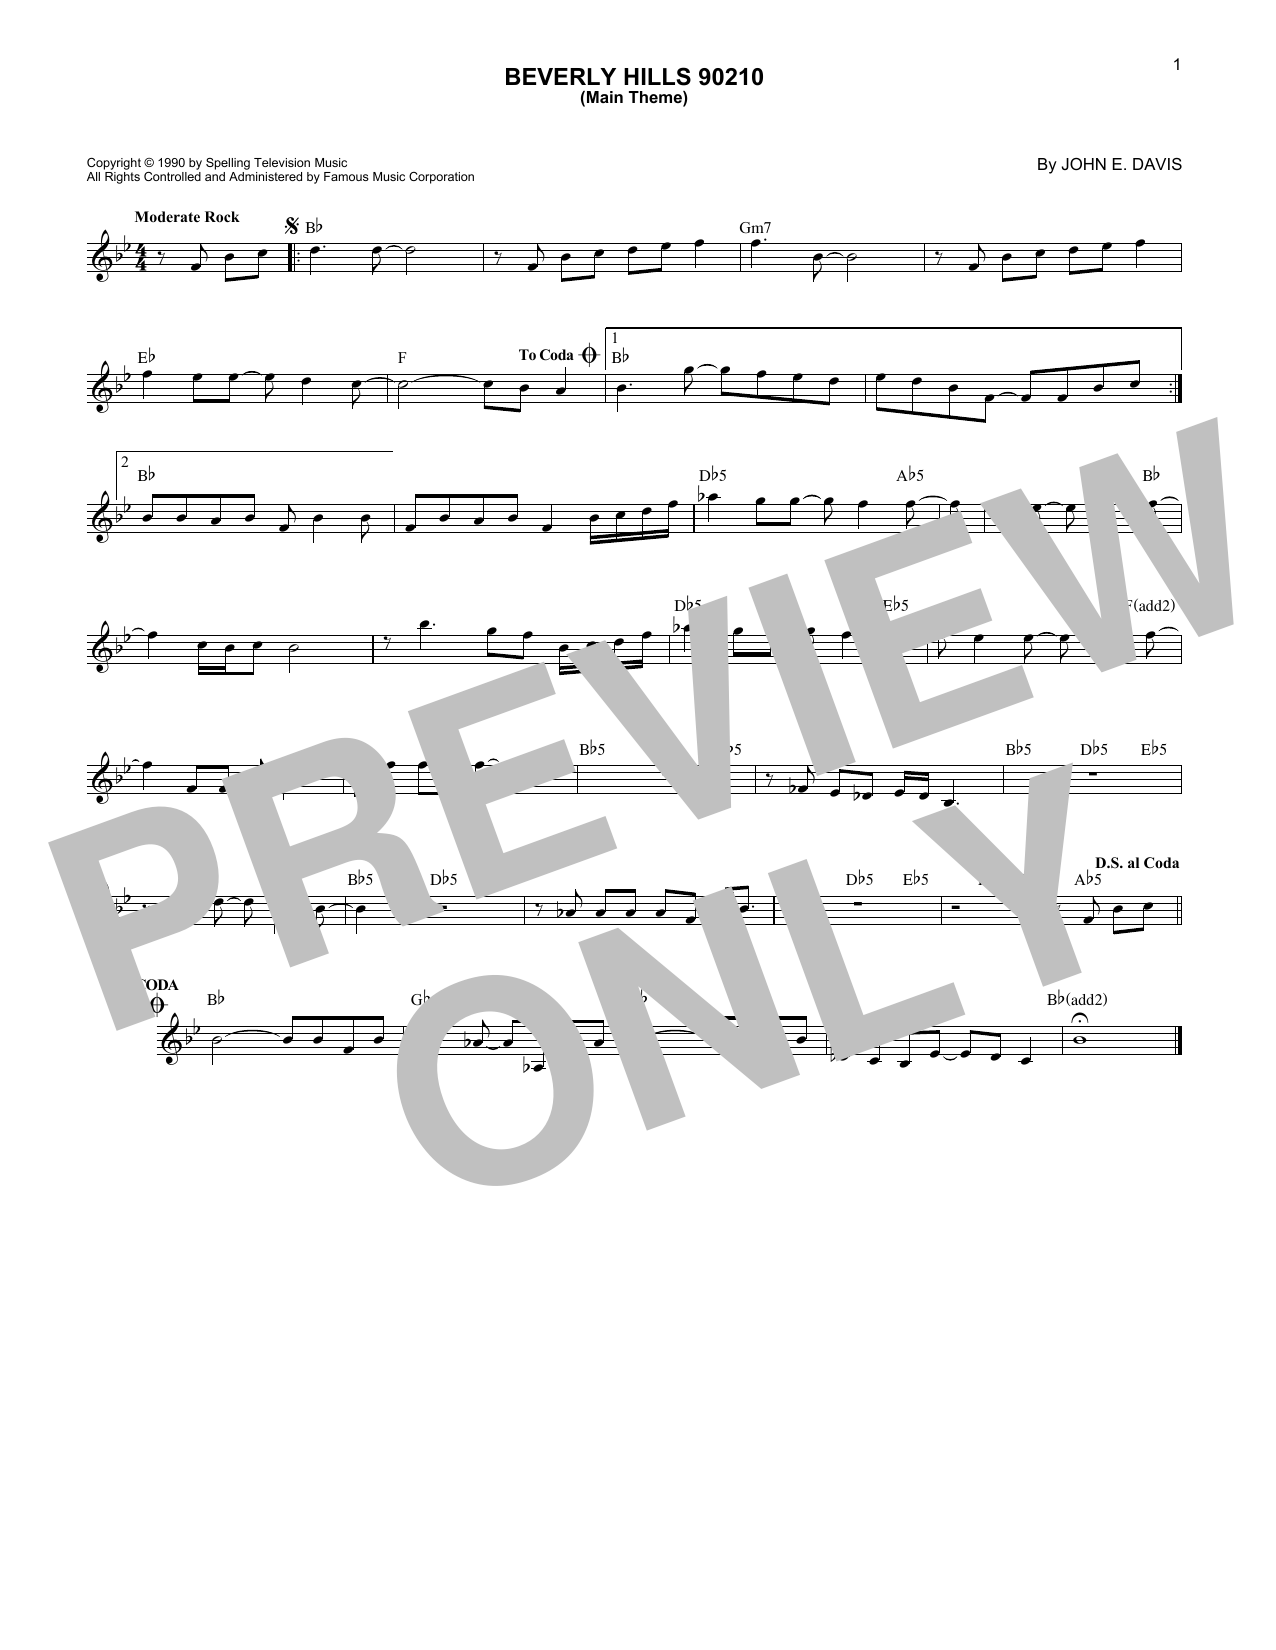 John E. Davis Beverly Hills 90210 (Main Theme) Sheet Music Notes & Chords for Melody Line, Lyrics & Chords - Download or Print PDF